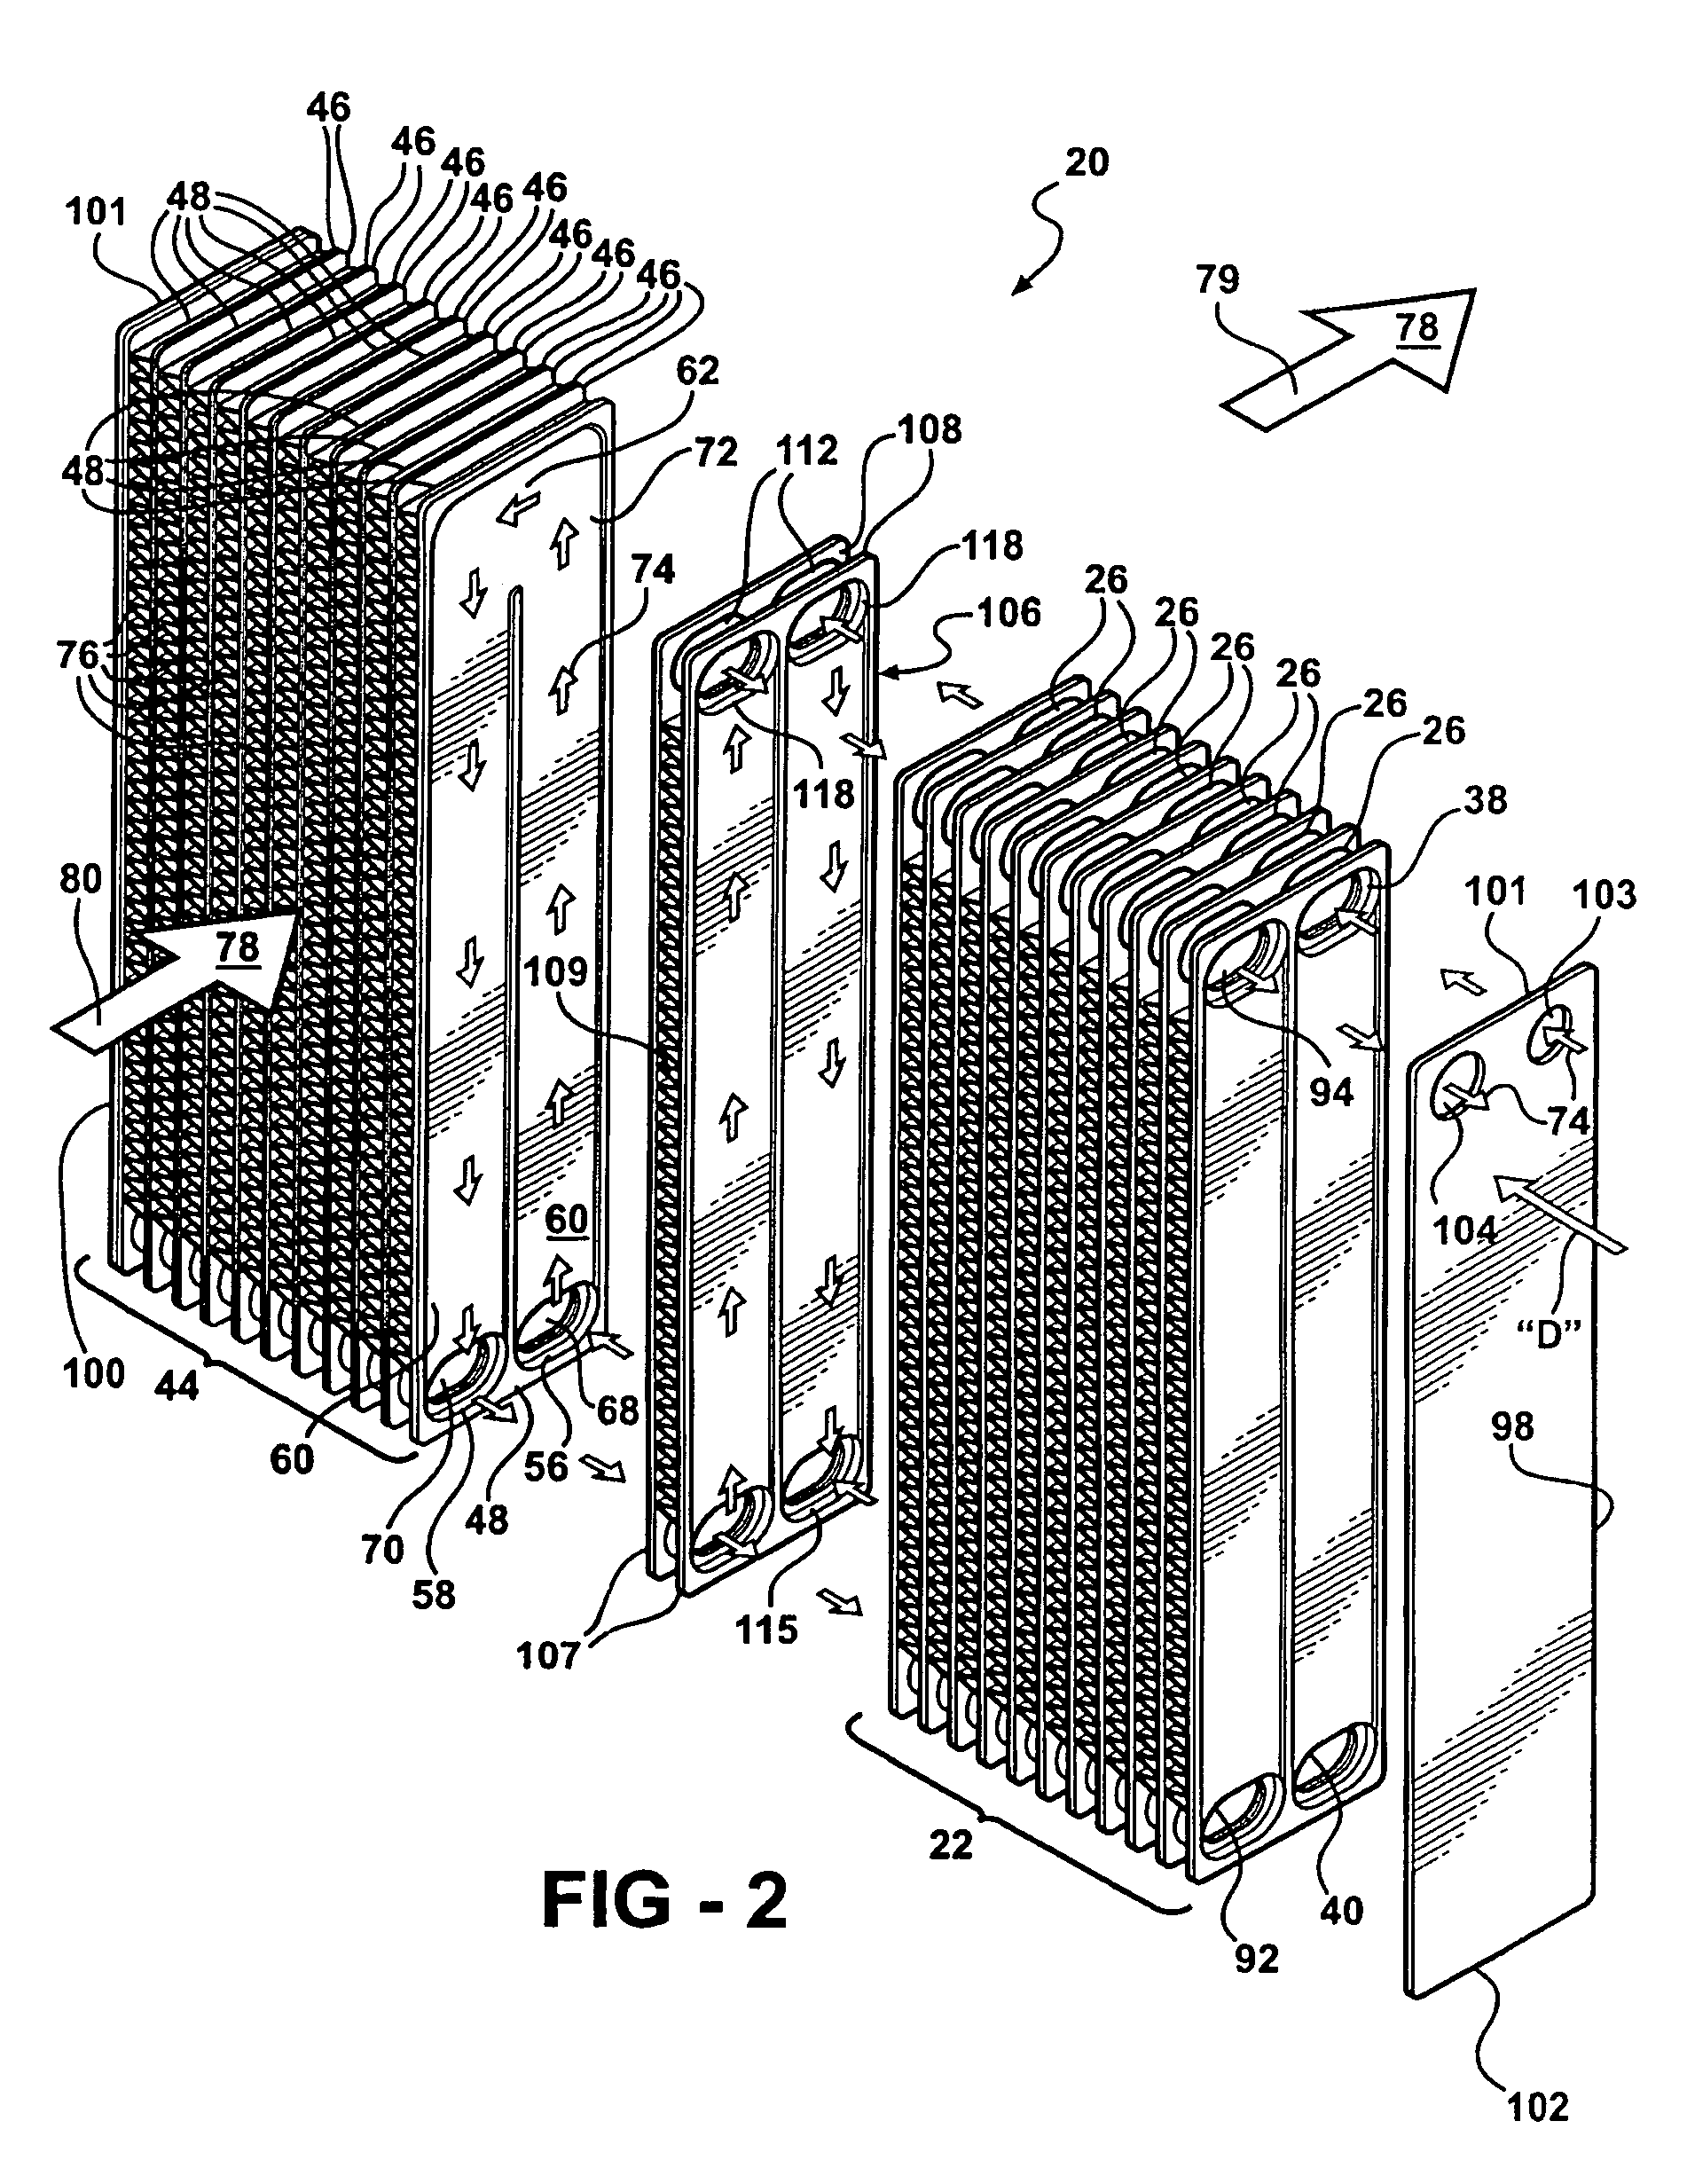 Hybrid evaporator